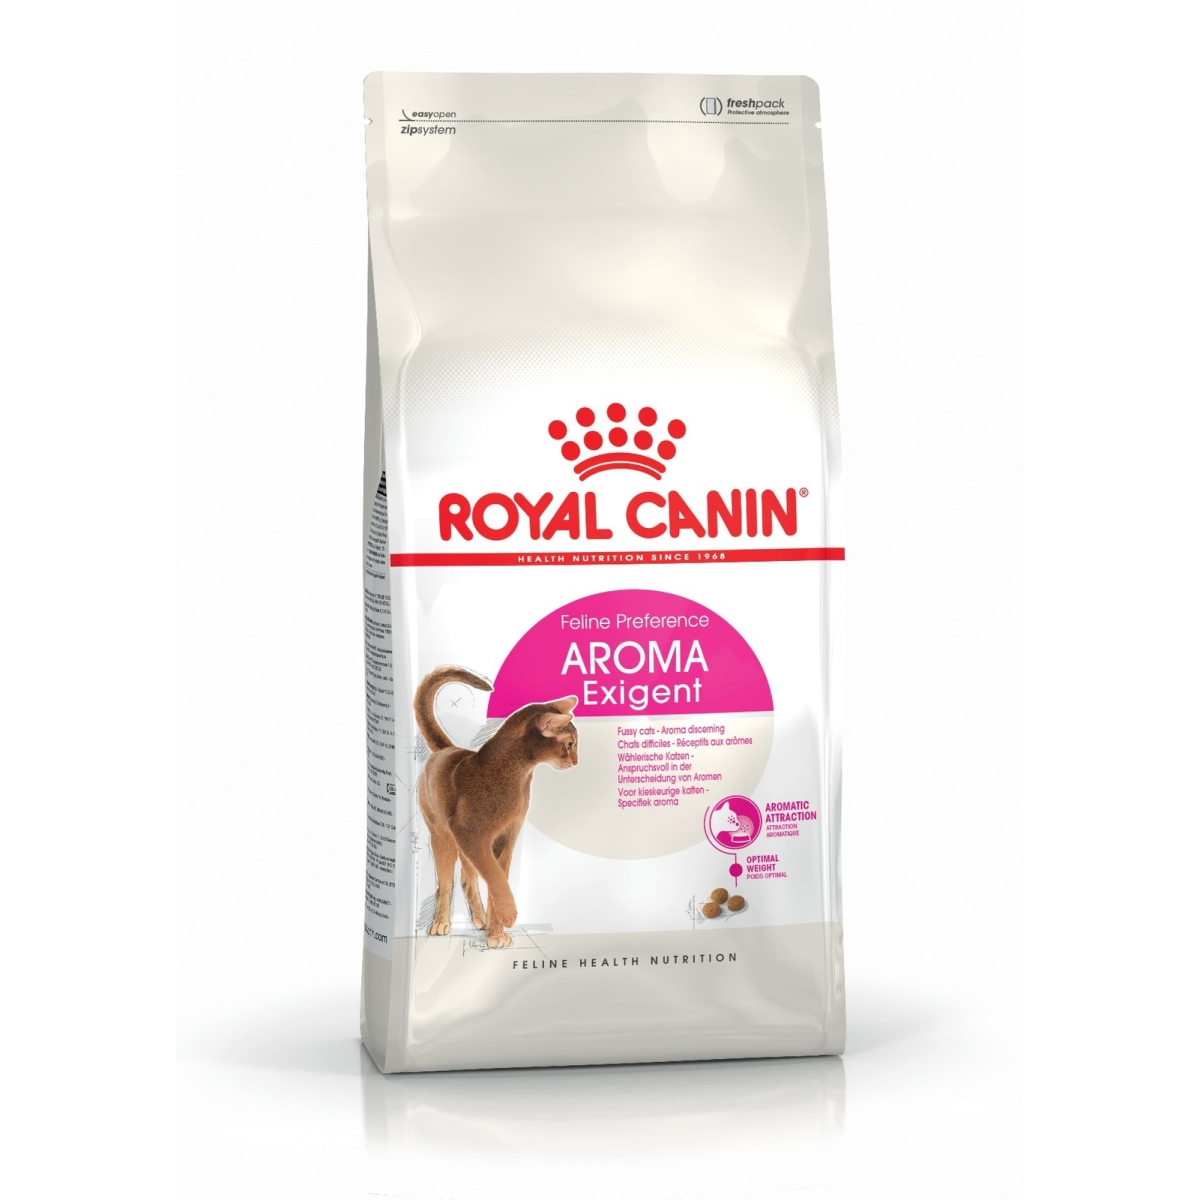 Royal Canin Aroma Exigent barība kaķiem, 2kg